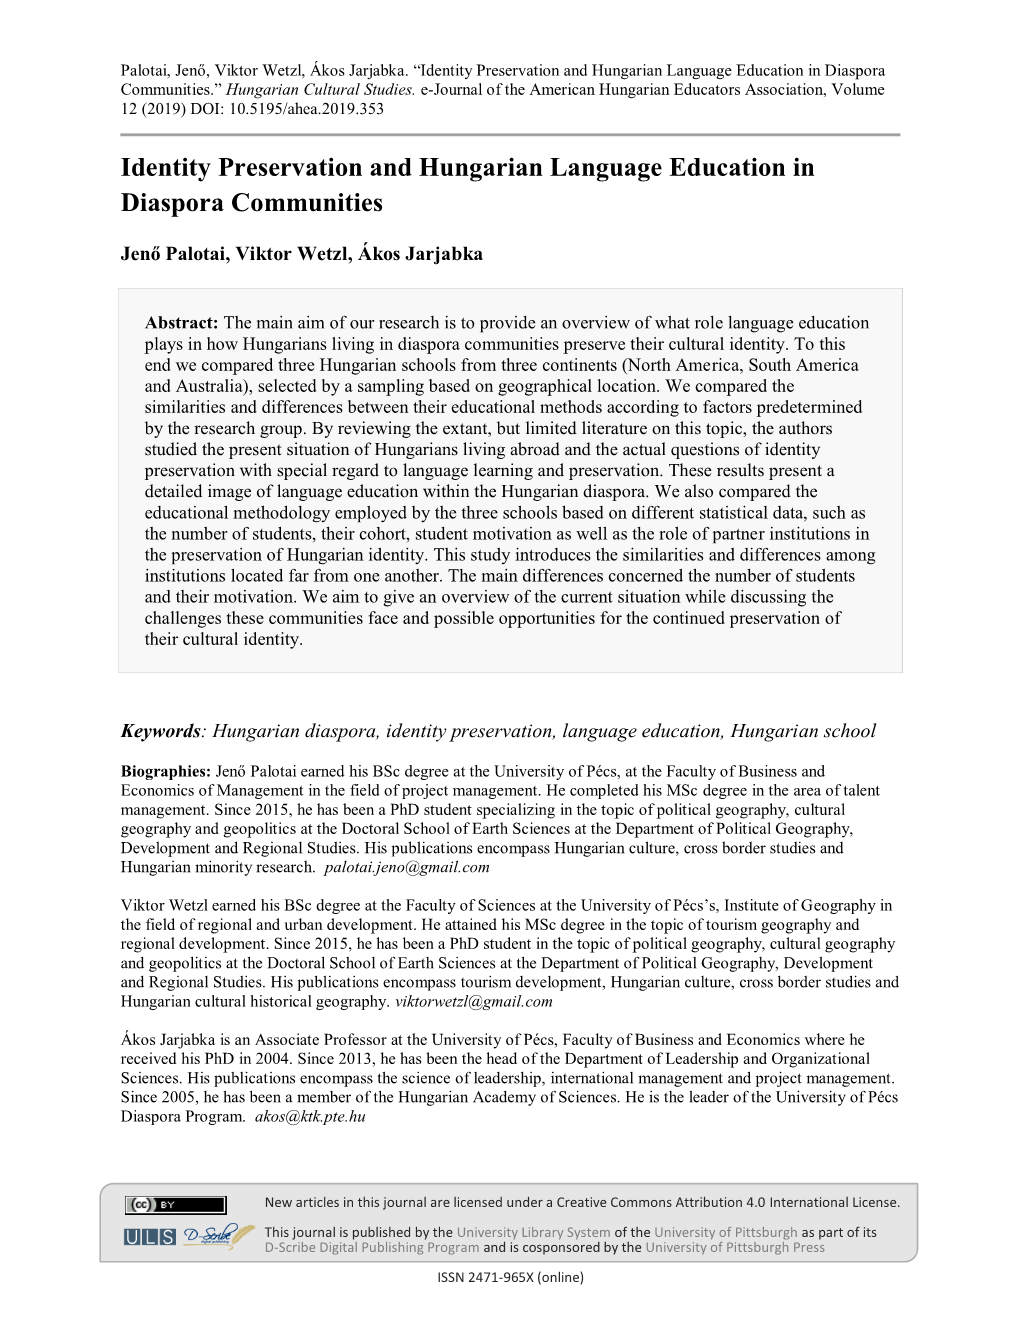 Identity Preservation and Hungarian Language Education in Diaspora Communities.” Hungarian Cultural Studies